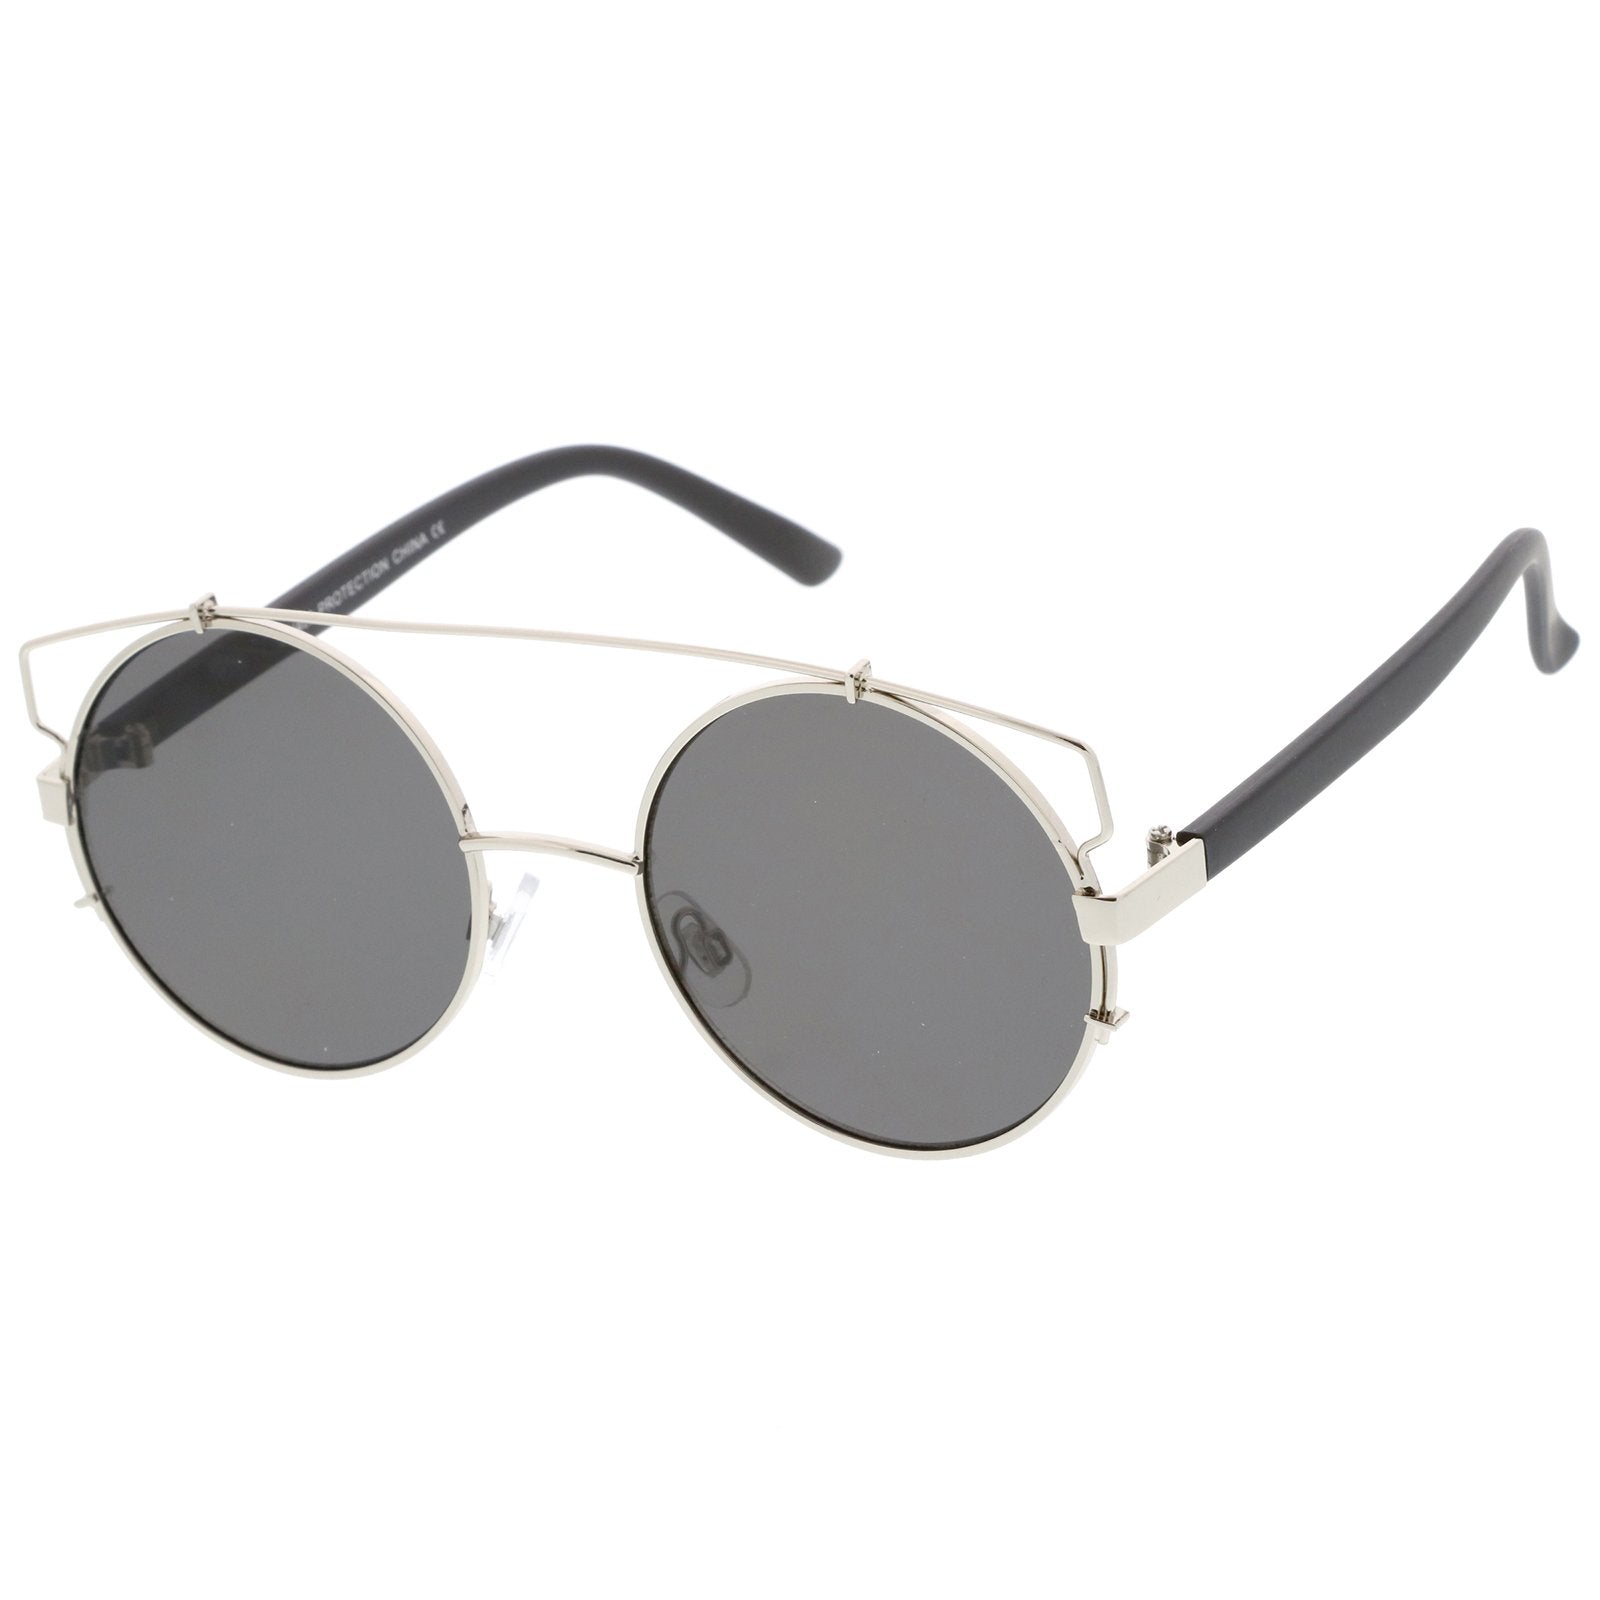 Retro Modern Oversize Round Flat Lens Crossbar Sunglasses - zeroUV